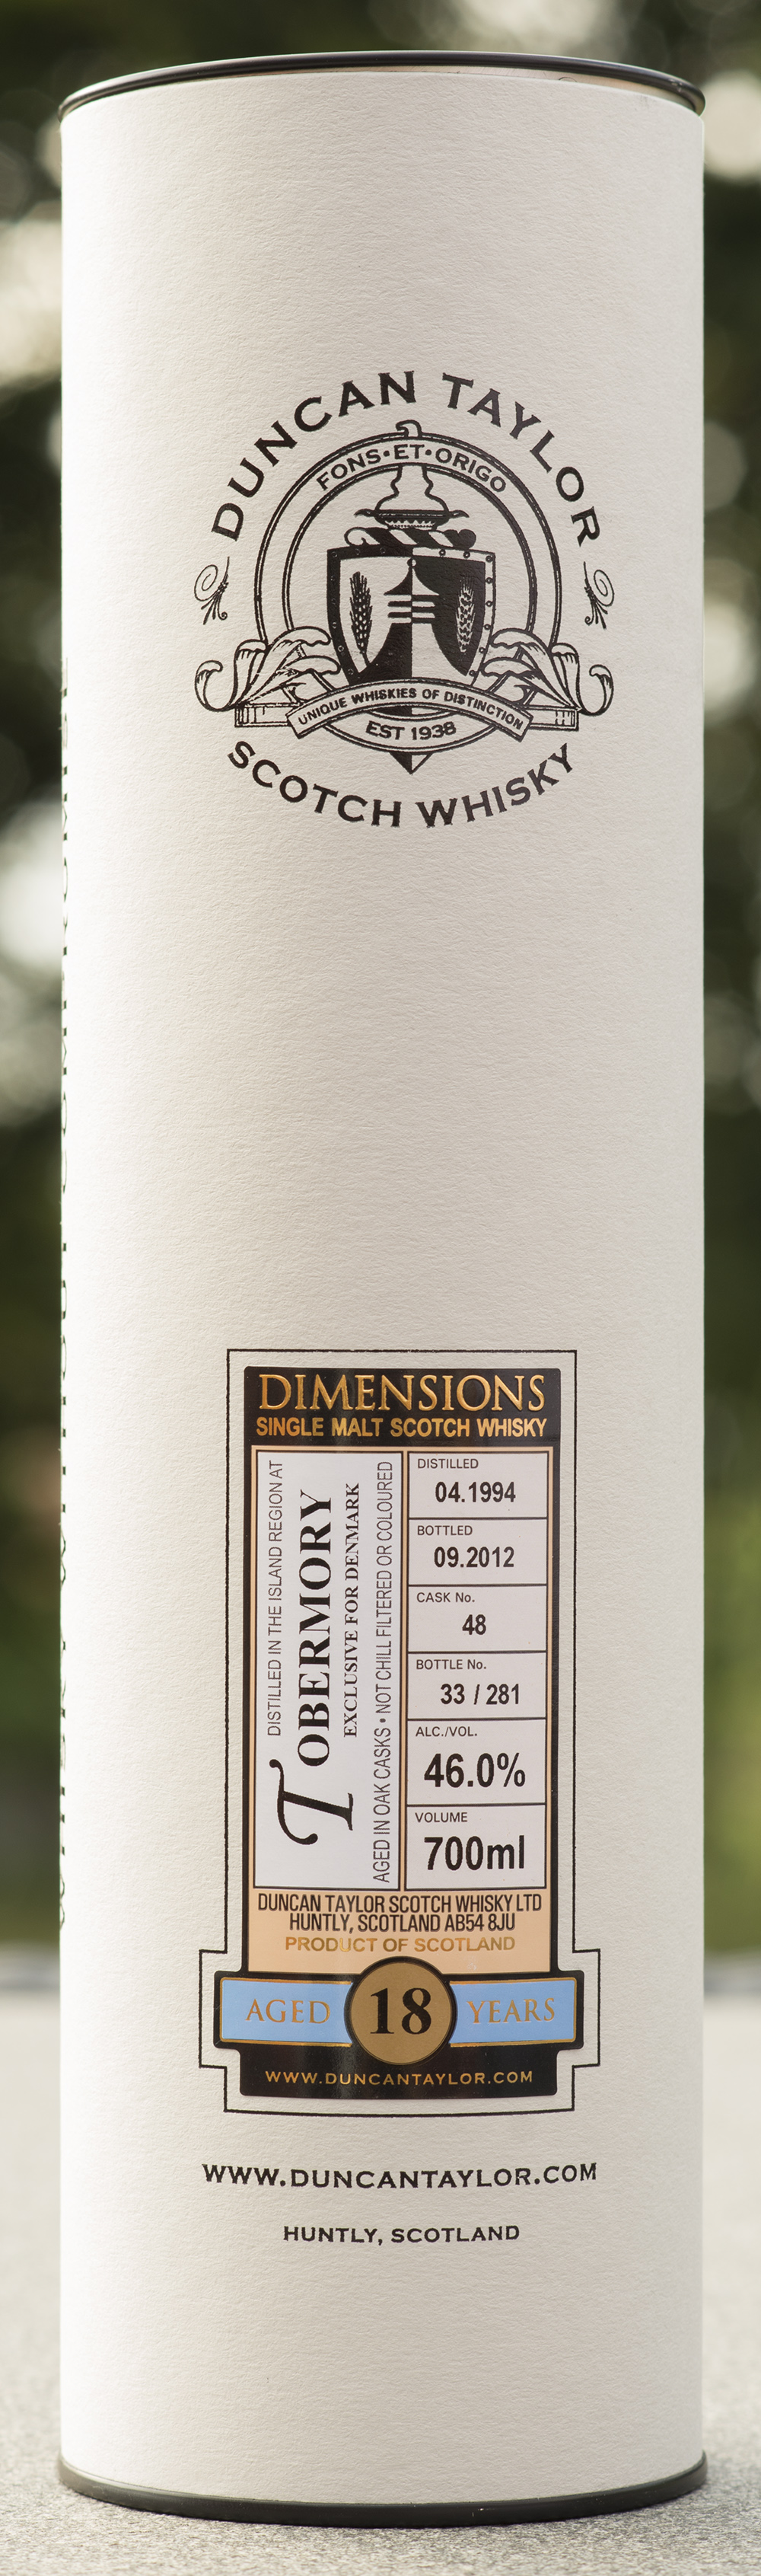 Billede: DSC_3328 Tobermory 1994-2012 - Dimensions - cask 48 - tube front.jpg